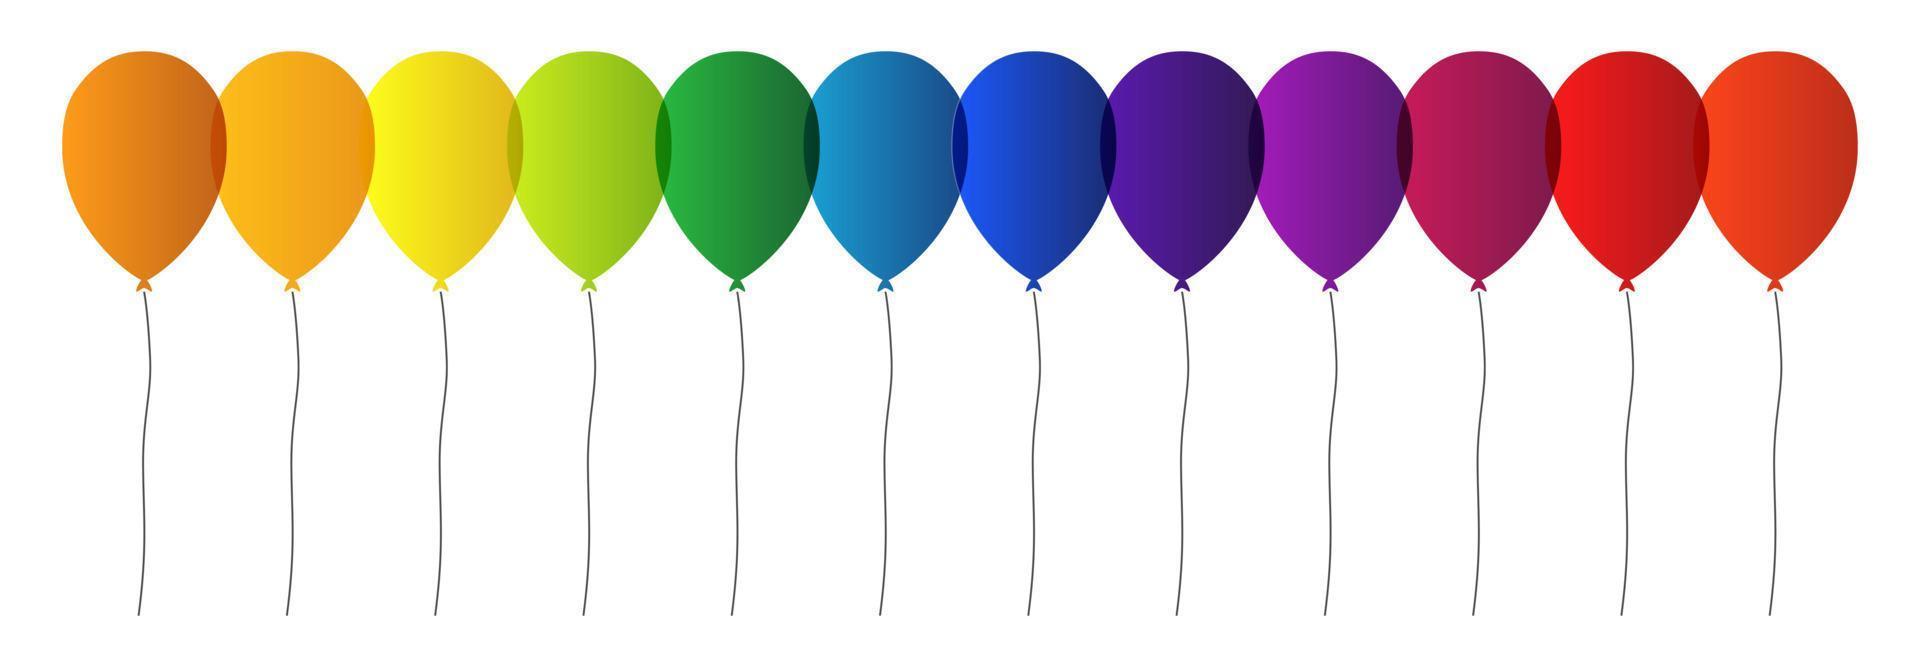 Rainbow balloons on white background vector